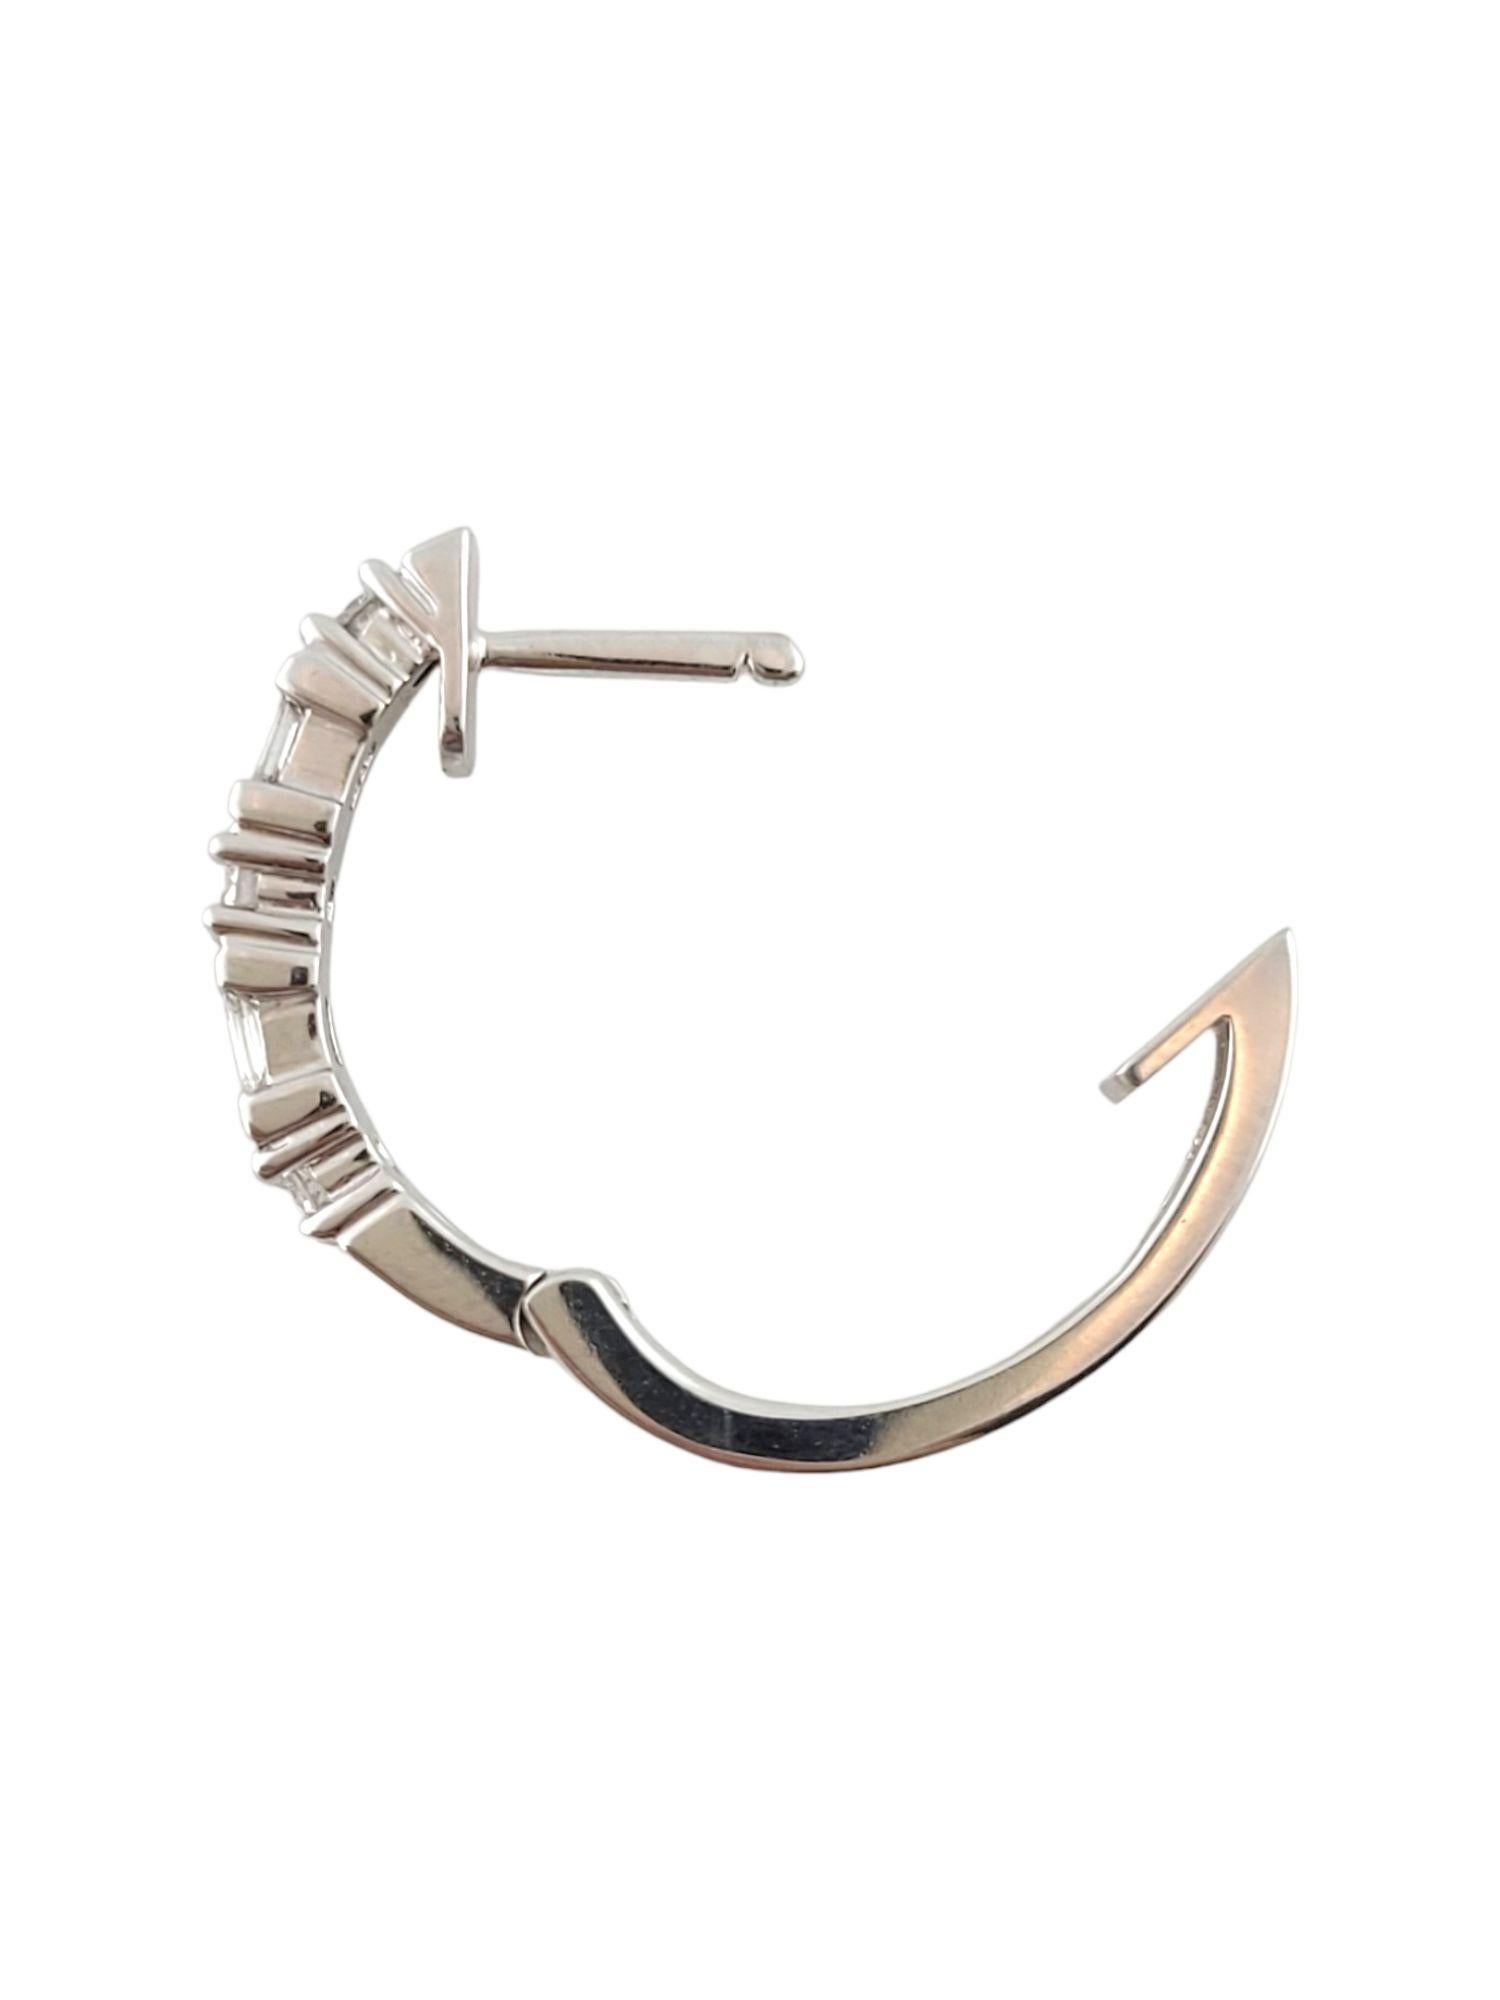 Baguette Cut  14K White Gold Diamond Hoop Earrings #14828 For Sale